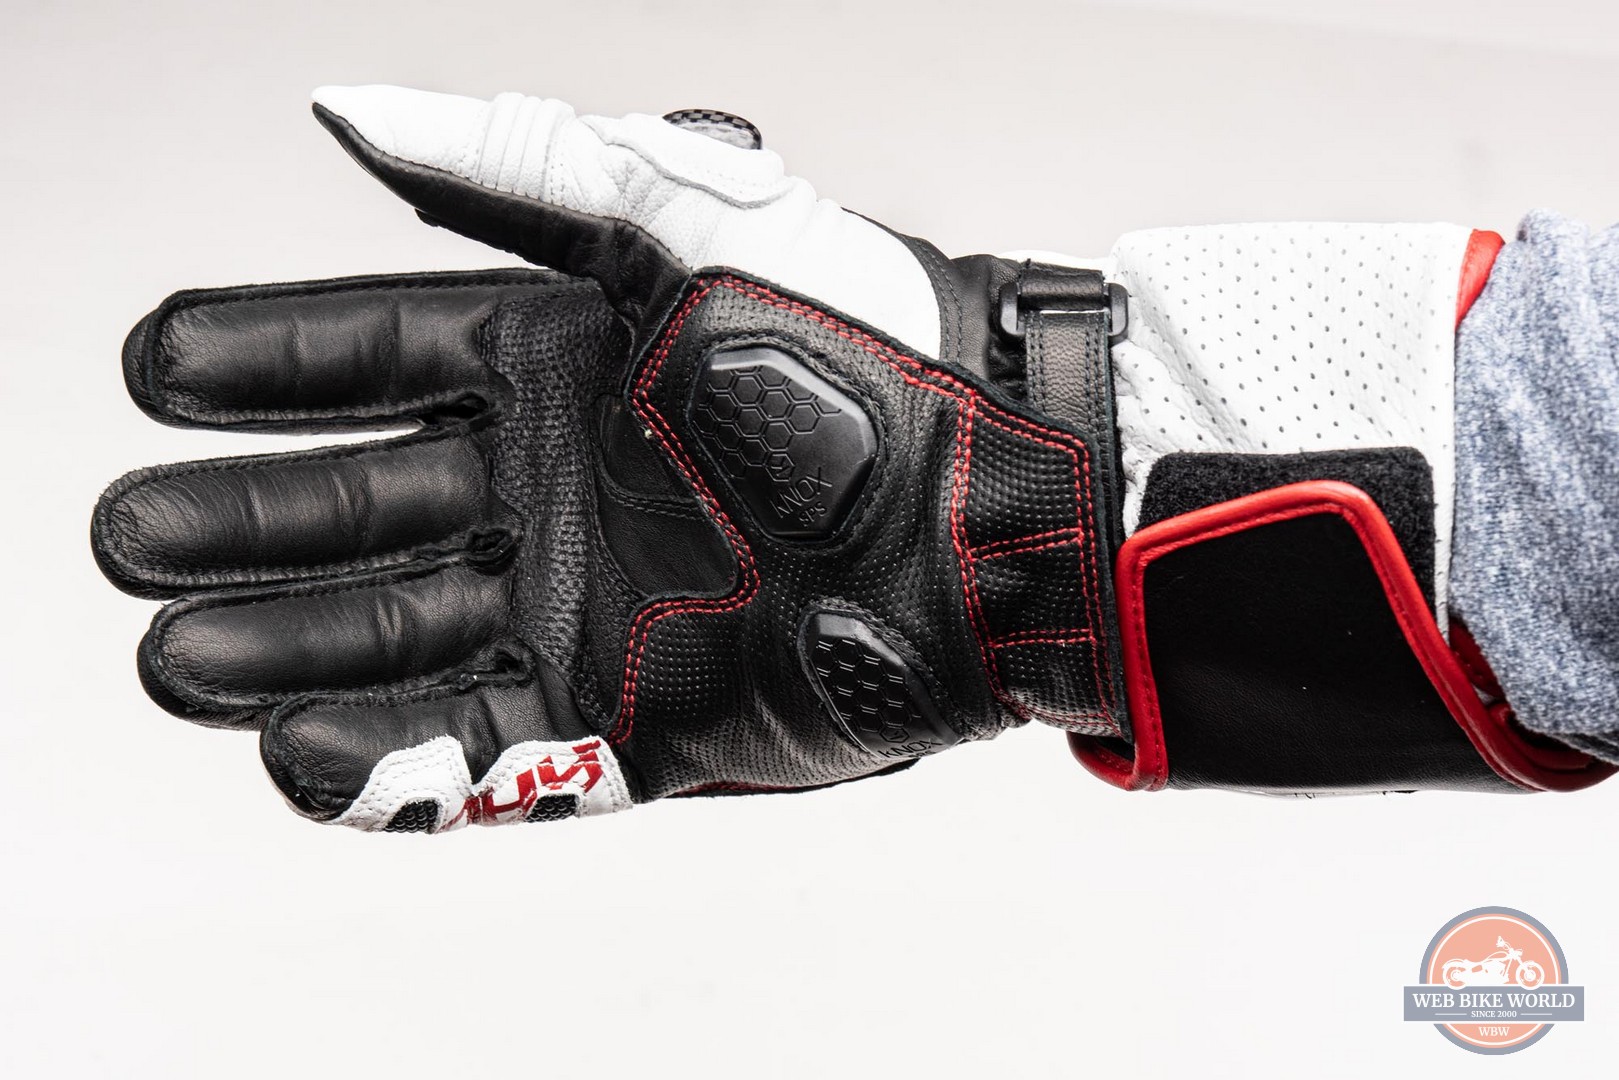 Underside view of the Hi-Per gloves